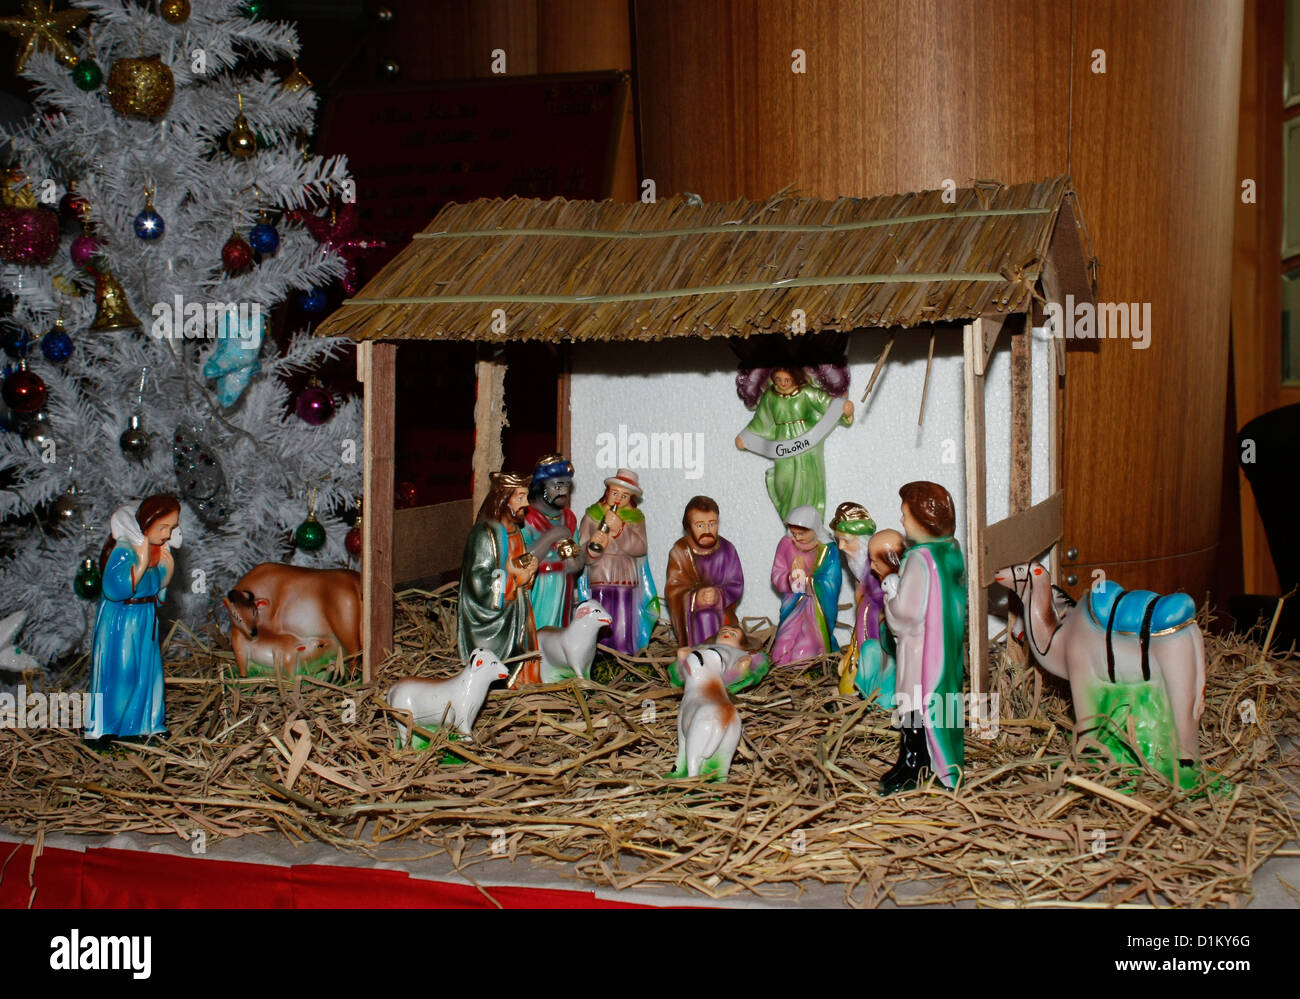 Nativity scene Cristmas Stock Image